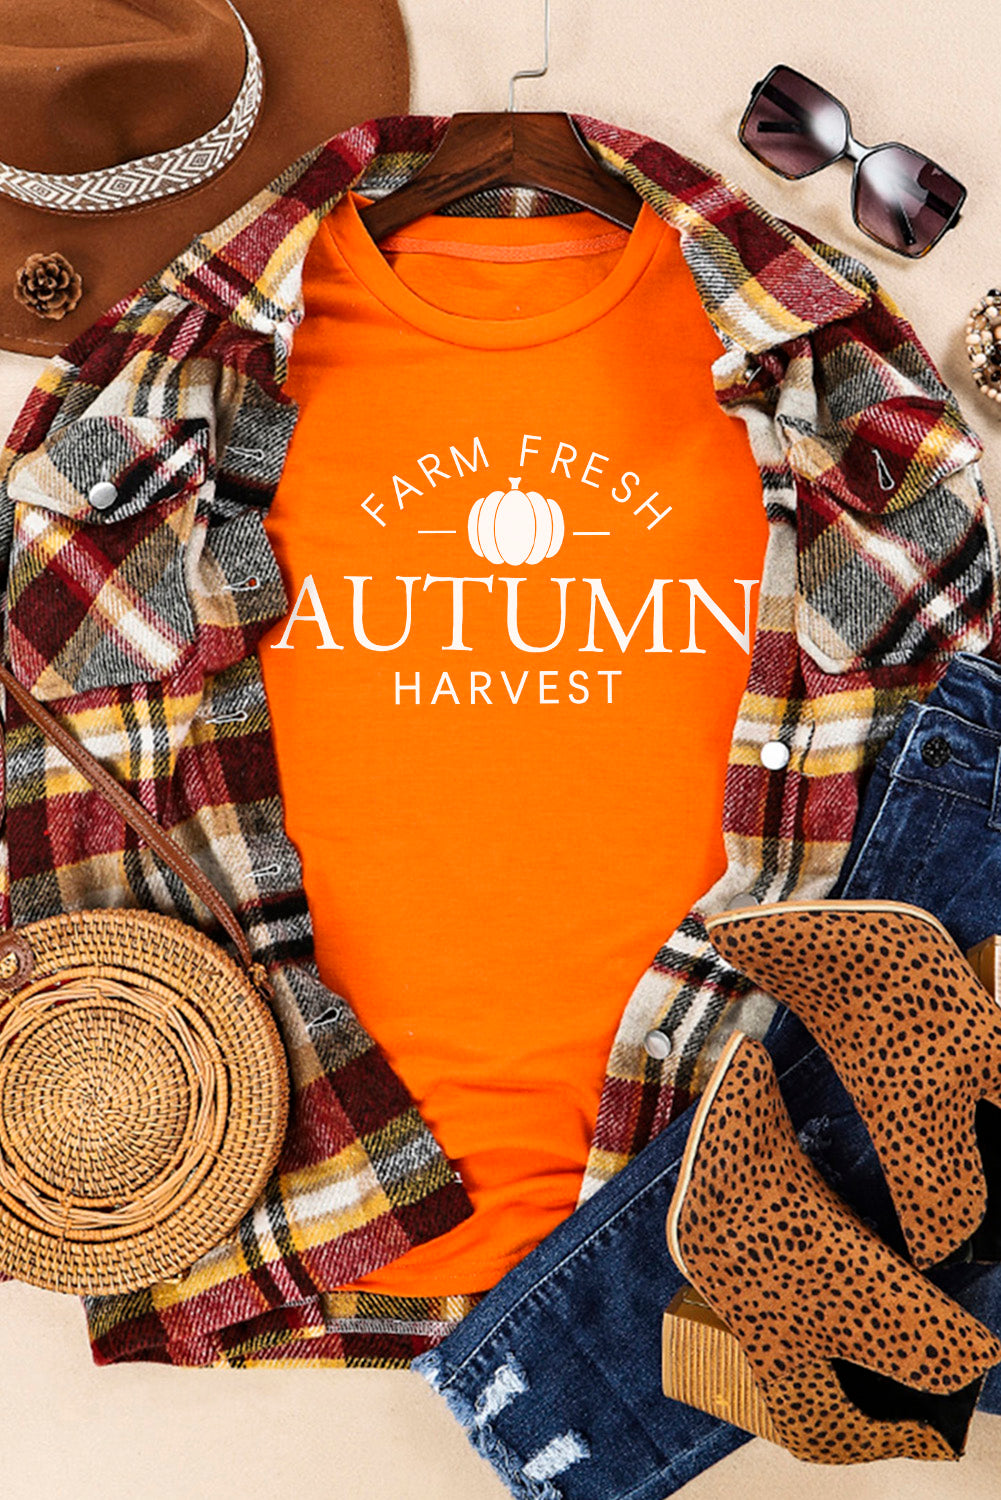 FARM FRESH AUTUMN Harvest Short Sleeve T Shirt